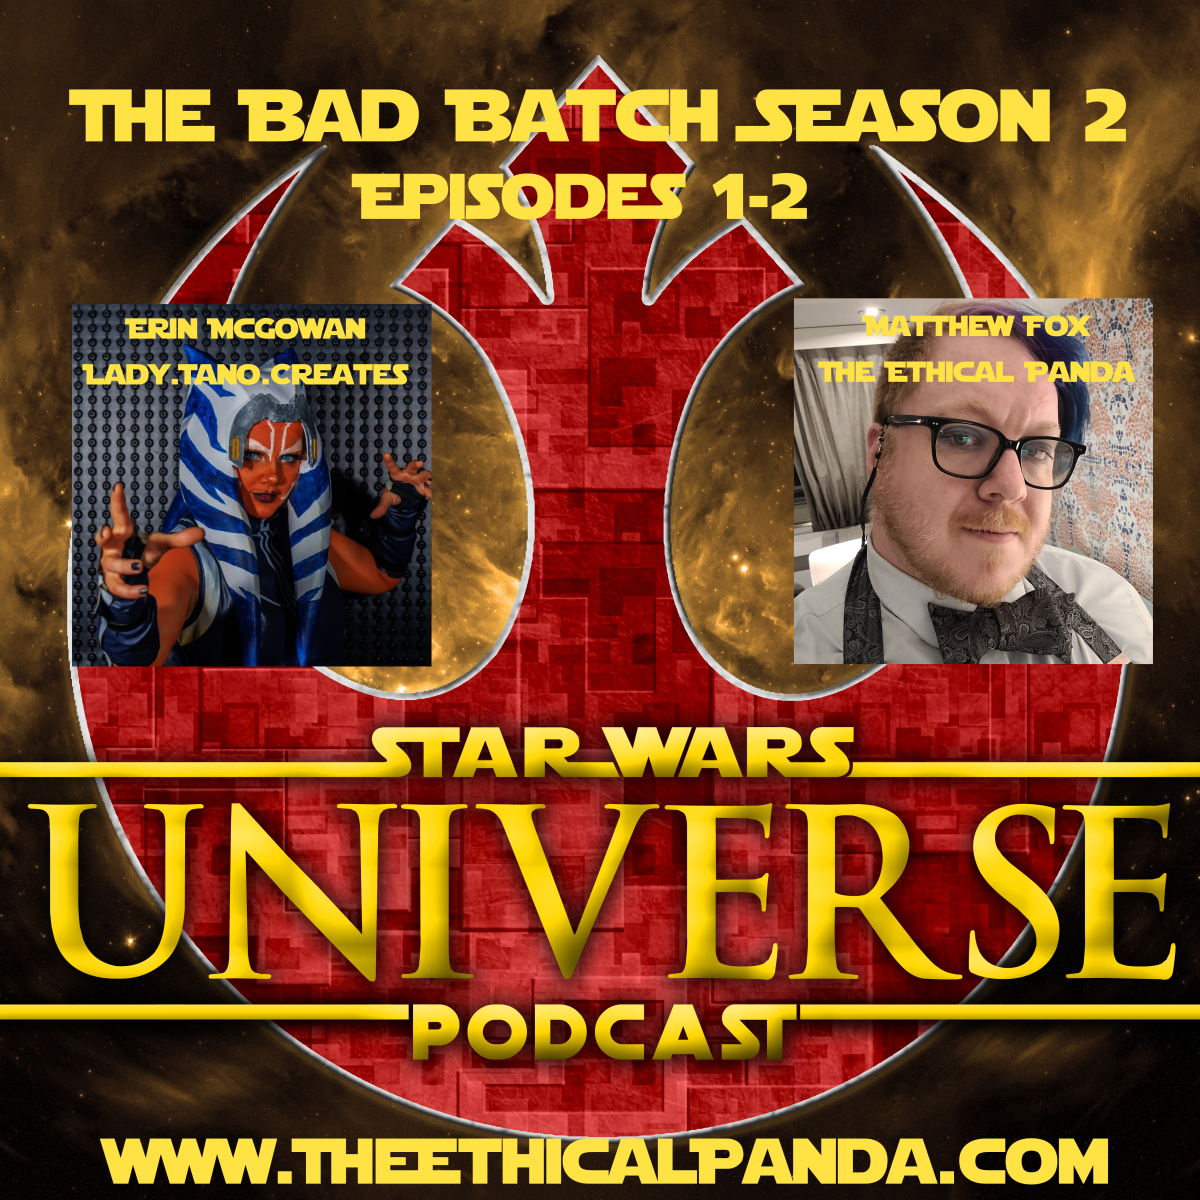 The Bad Batch Season 2, Episodes 1-2